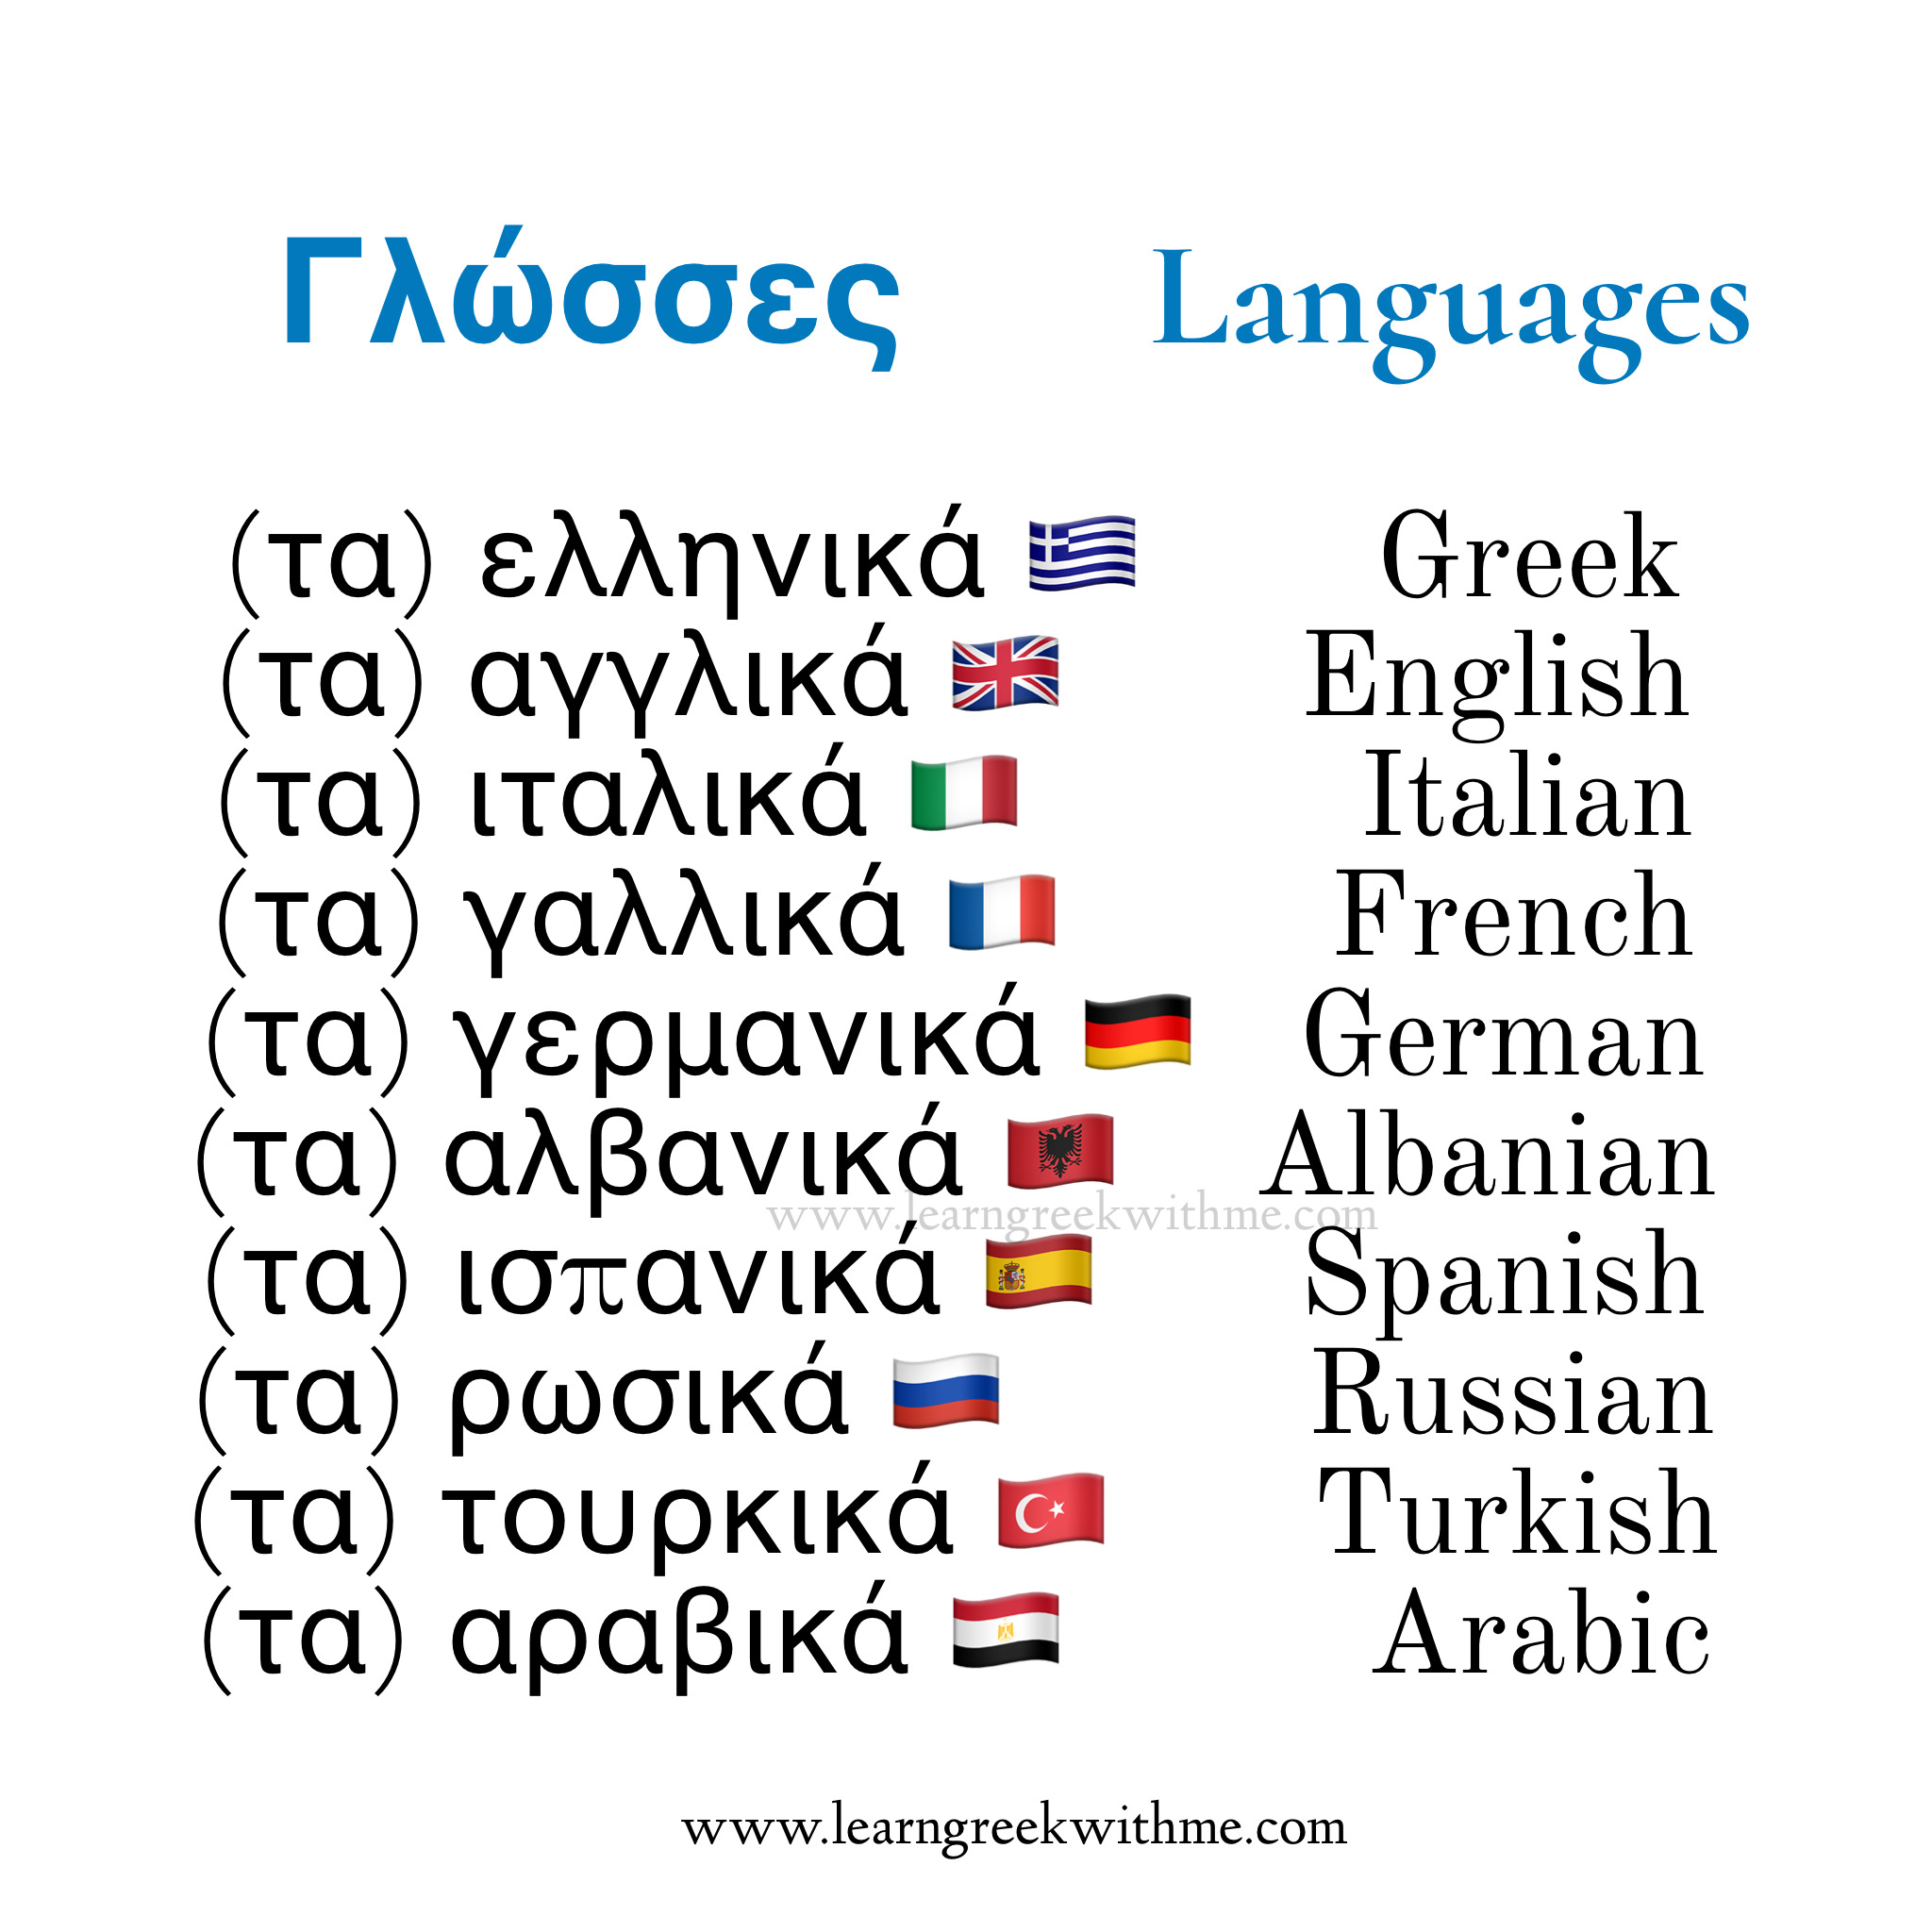 Languages in Greek